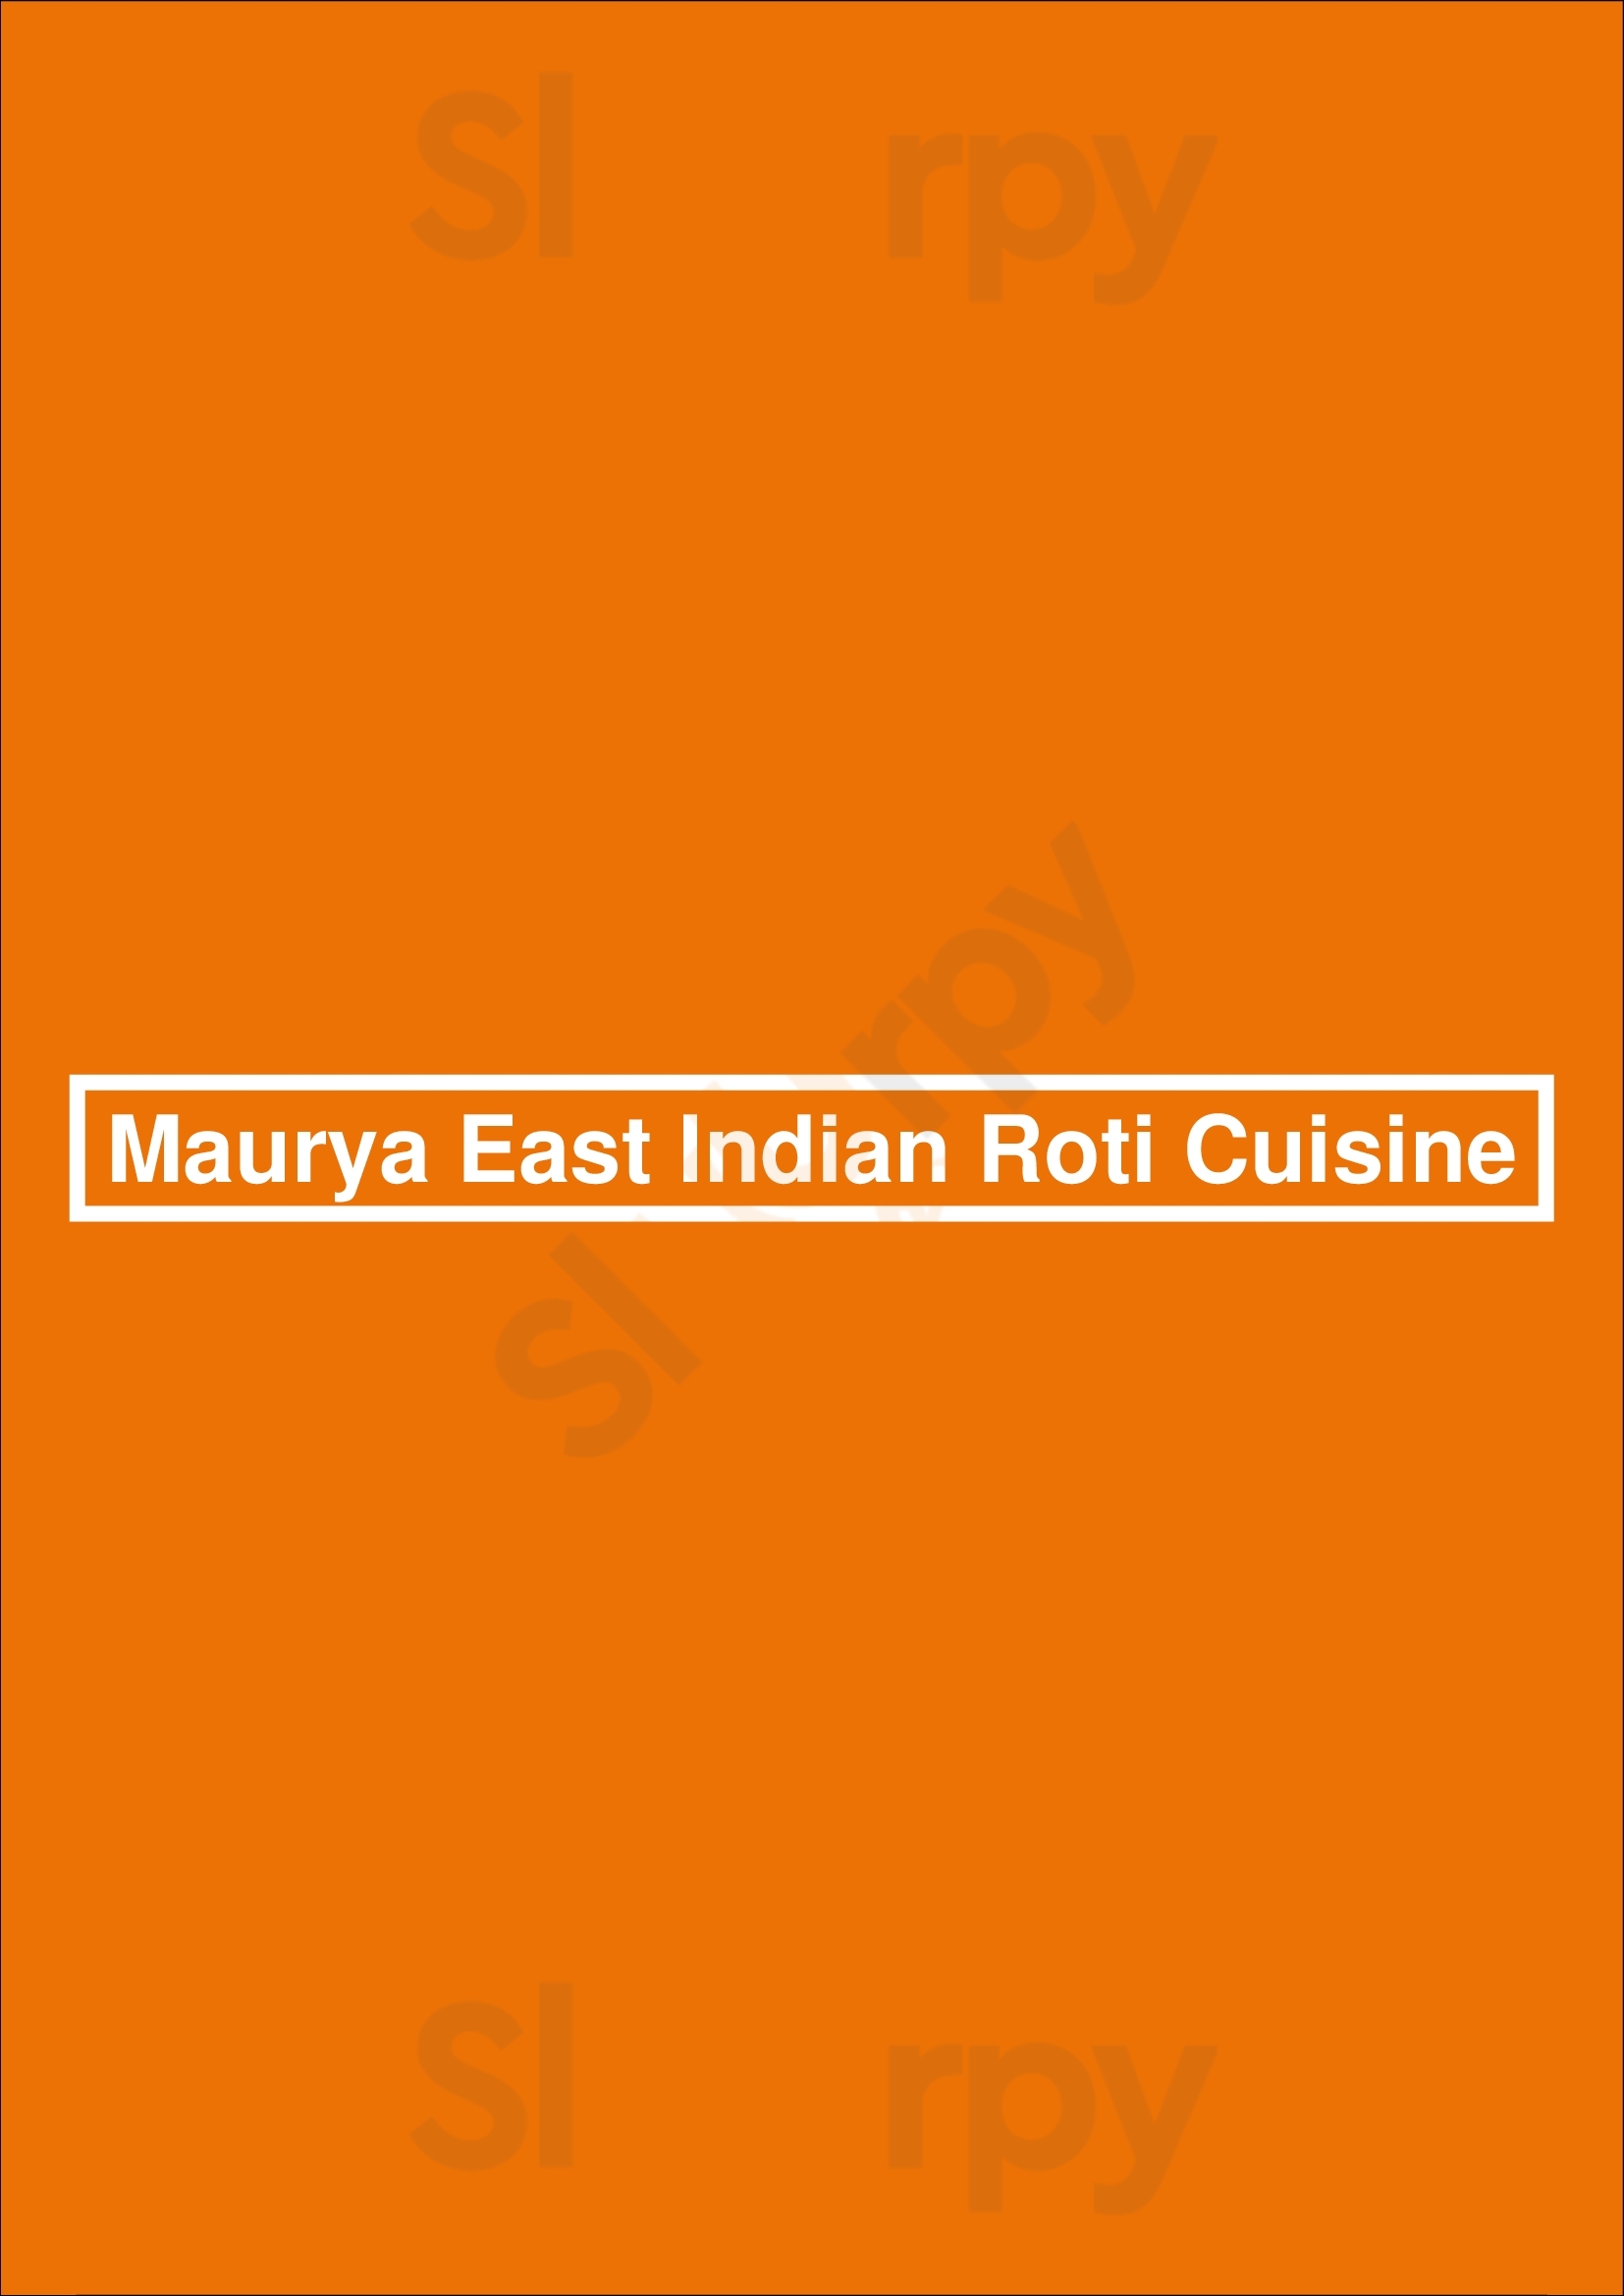 Maurya East Indian Roti Cuisine Toronto Menu - 1